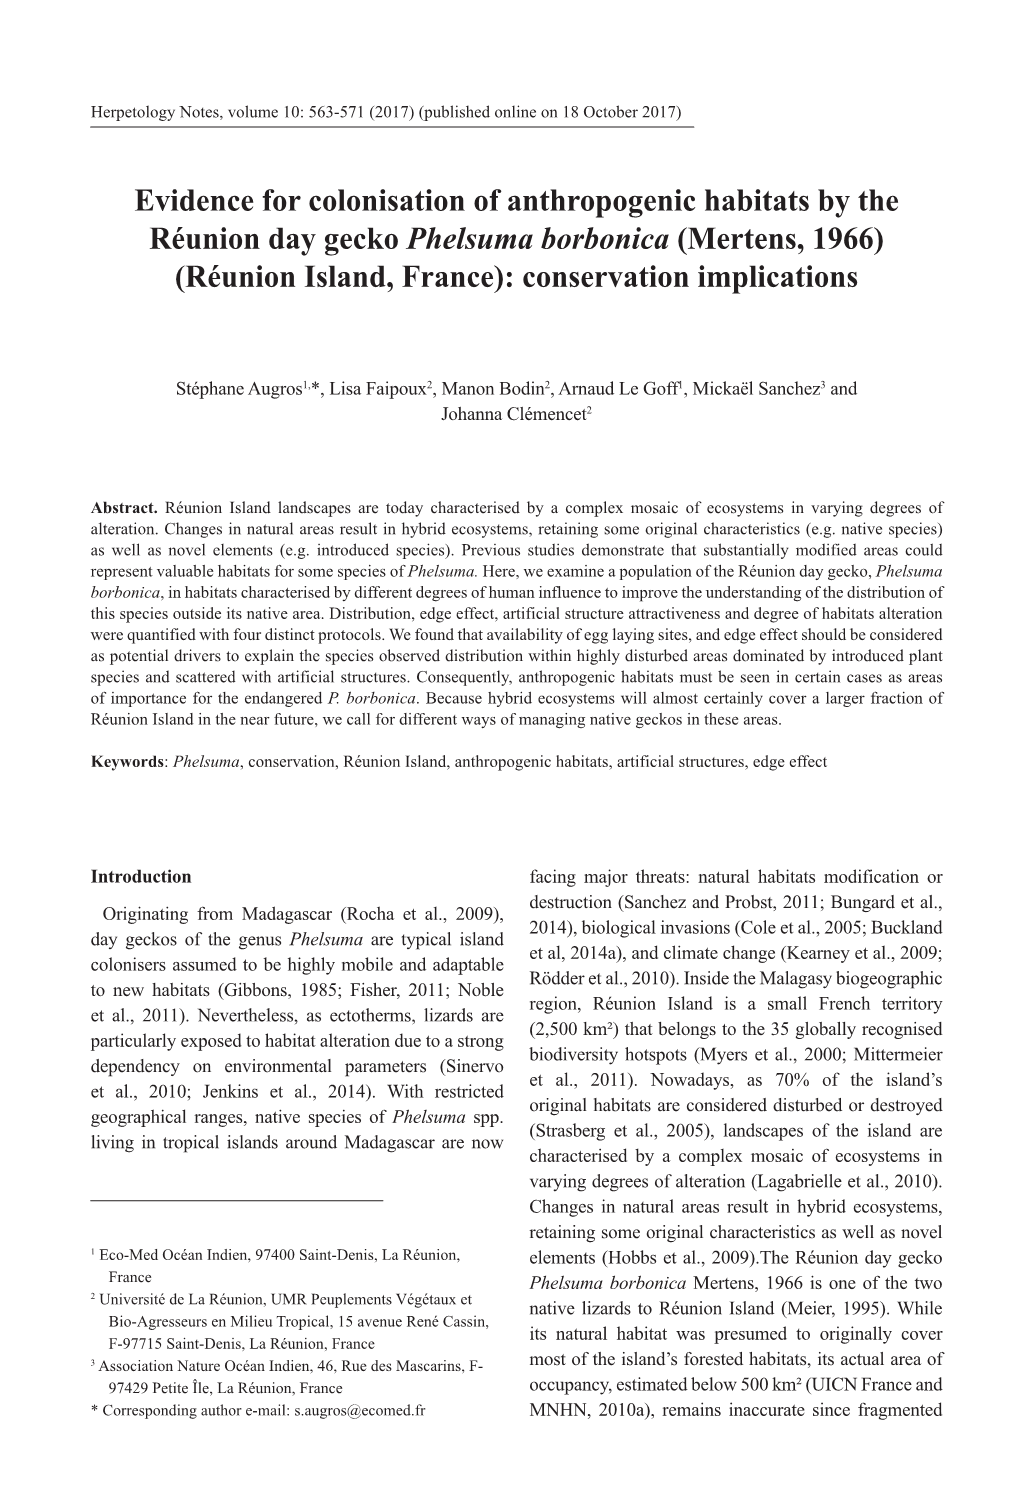 Evidence for Colonisation of Anthropogenic Habitats by the Réunion Day Gecko Phelsuma Borbonica (Mertens, 1966) (Réunion Island, France): Conservation Implications